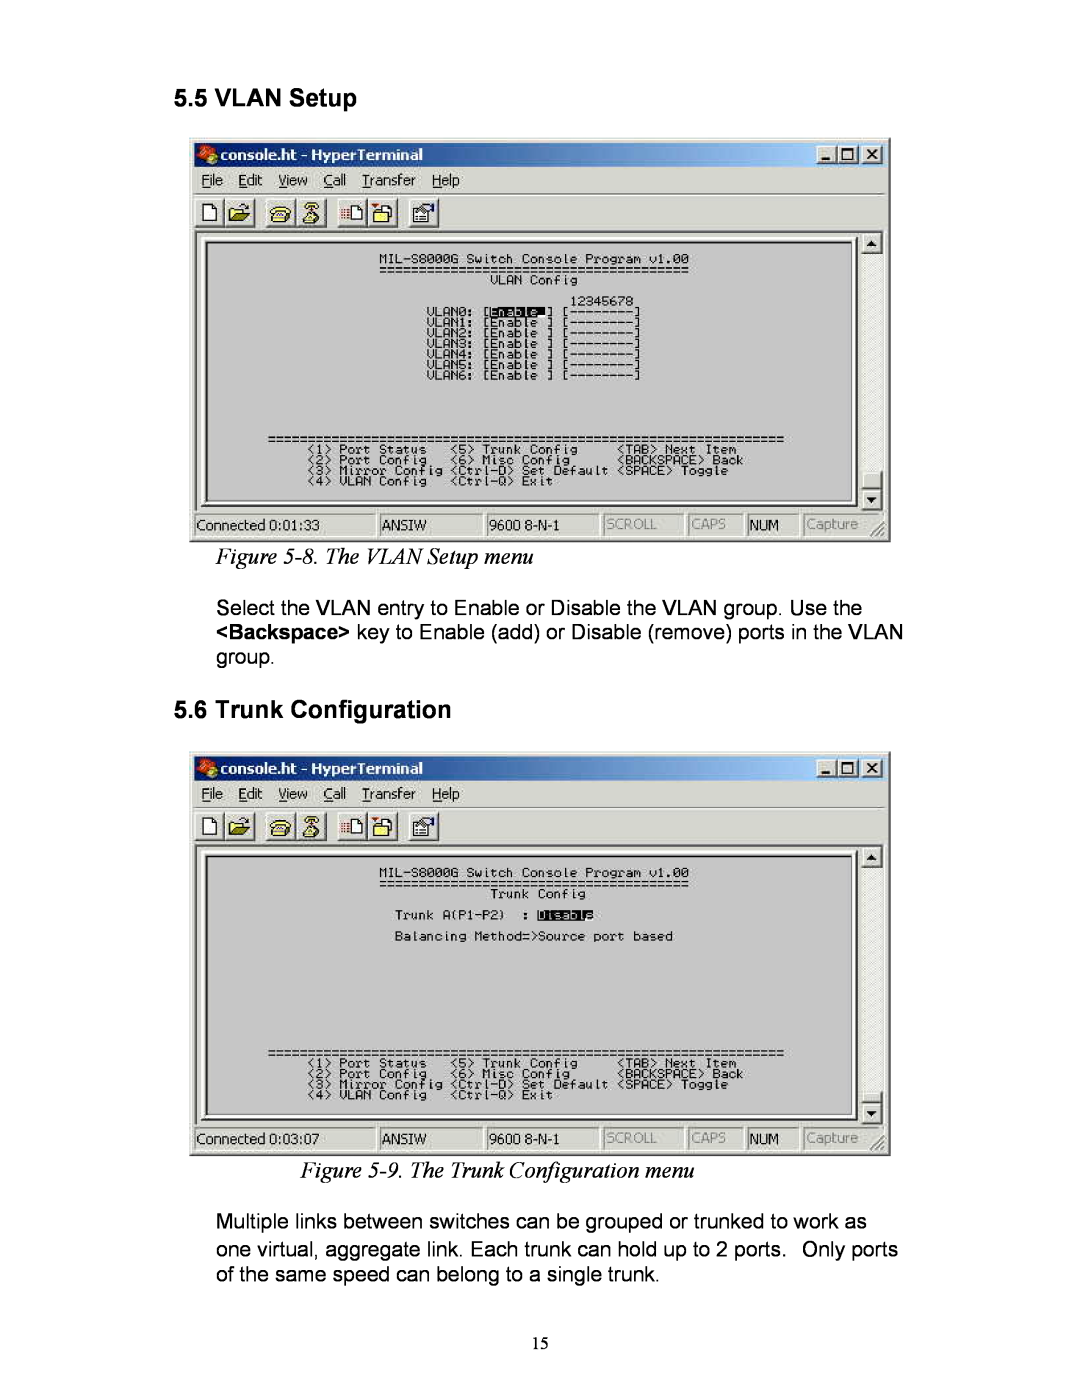 Milan Technology MIL-S8000G manual 8. The VLAN Setup menu, 9. The Trunk Configuration menu 